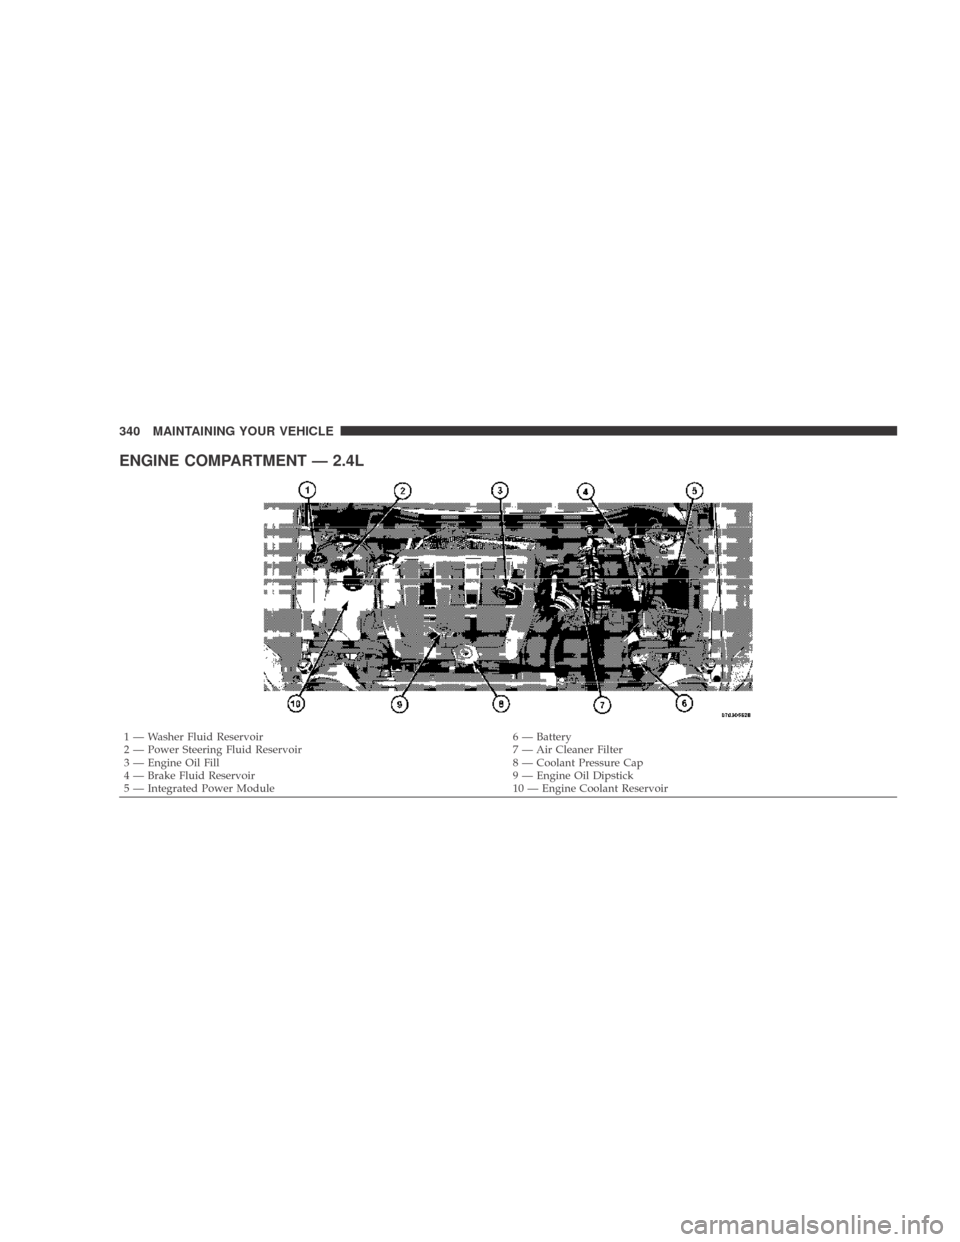 DODGE CALIBER 2009 1.G Owners Manual ENGINE COMPARTMENT — 2.4L
1 — Washer Fluid Reservoir6 — Battery
2 — Power Steering Fluid Reservoir 7 — Air Cleaner Filter
3 — Engine Oil Fill 8 — Coolant Pressure Cap
4 — Brake Fluid R